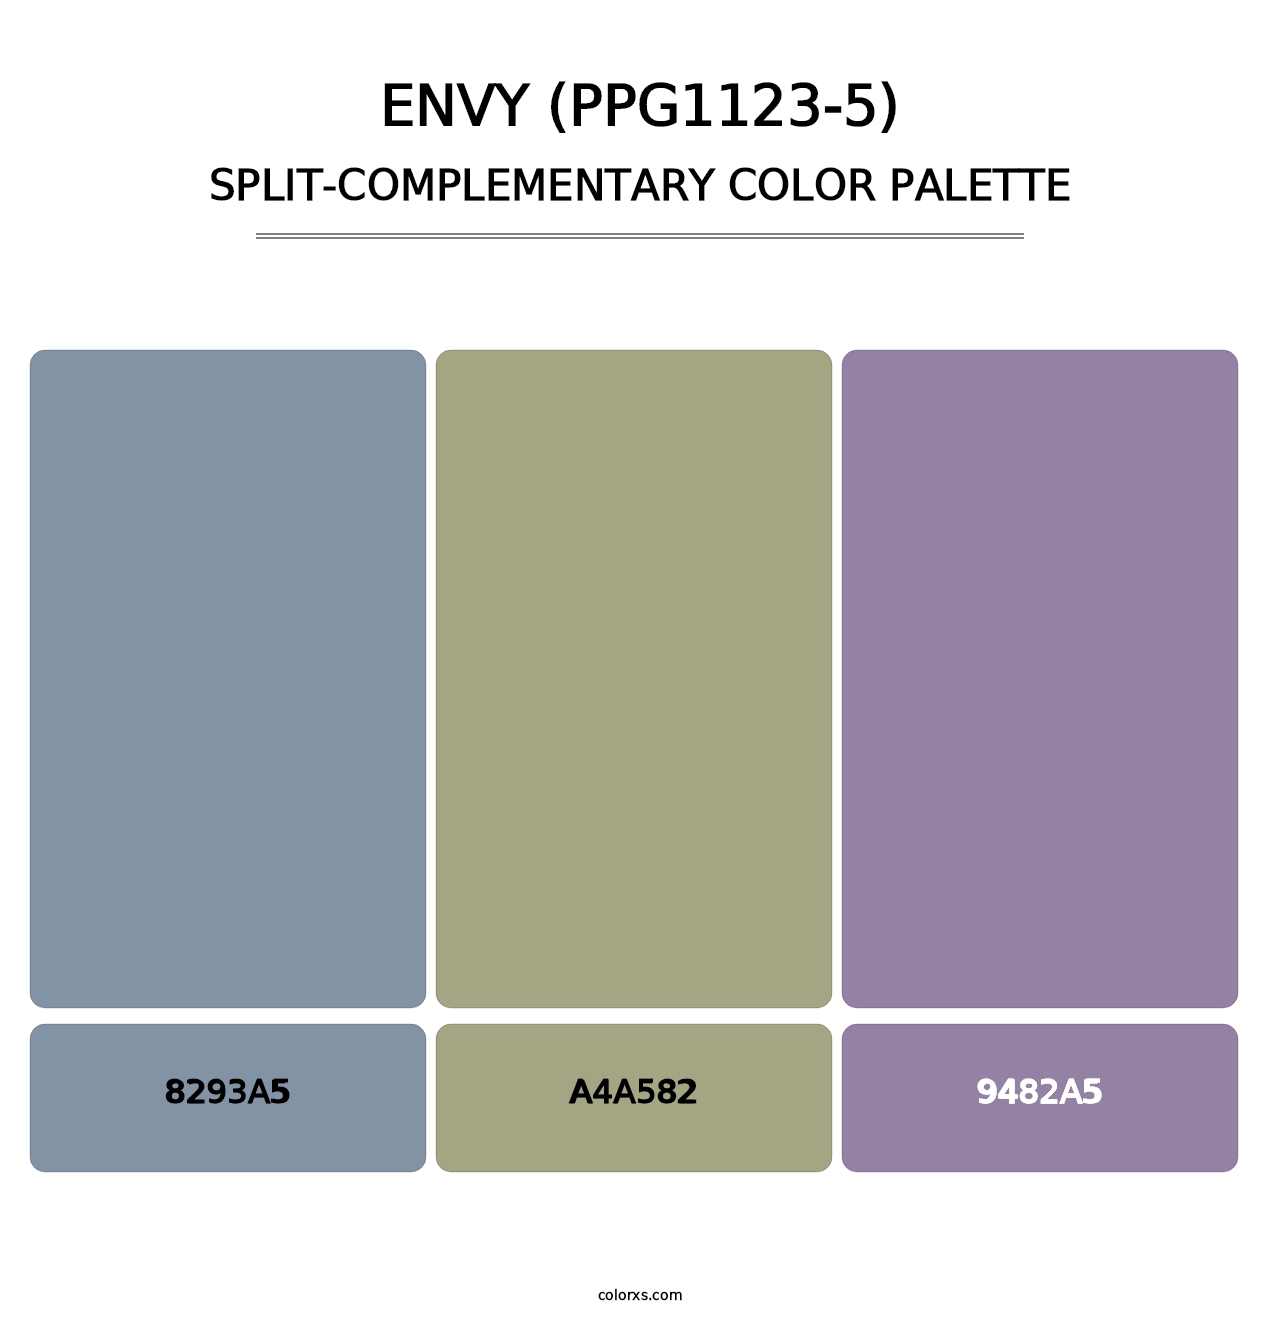 Envy (PPG1123-5) - Split-Complementary Color Palette